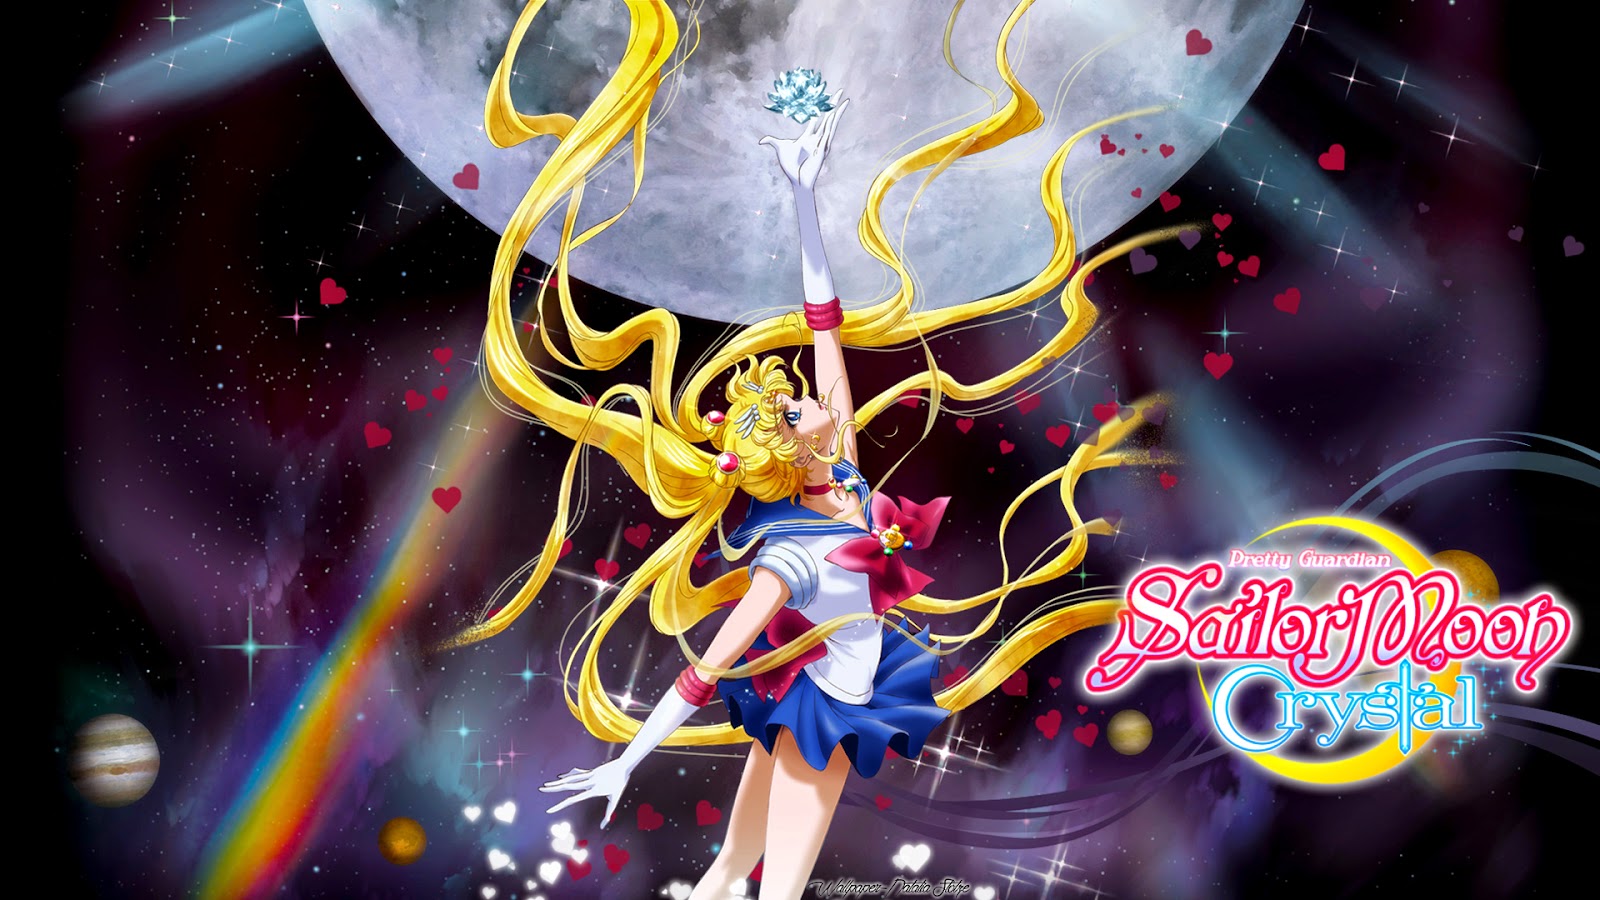 Third Sailor Moon Crystal Season Announced, Will Feature Dark Busters Arc